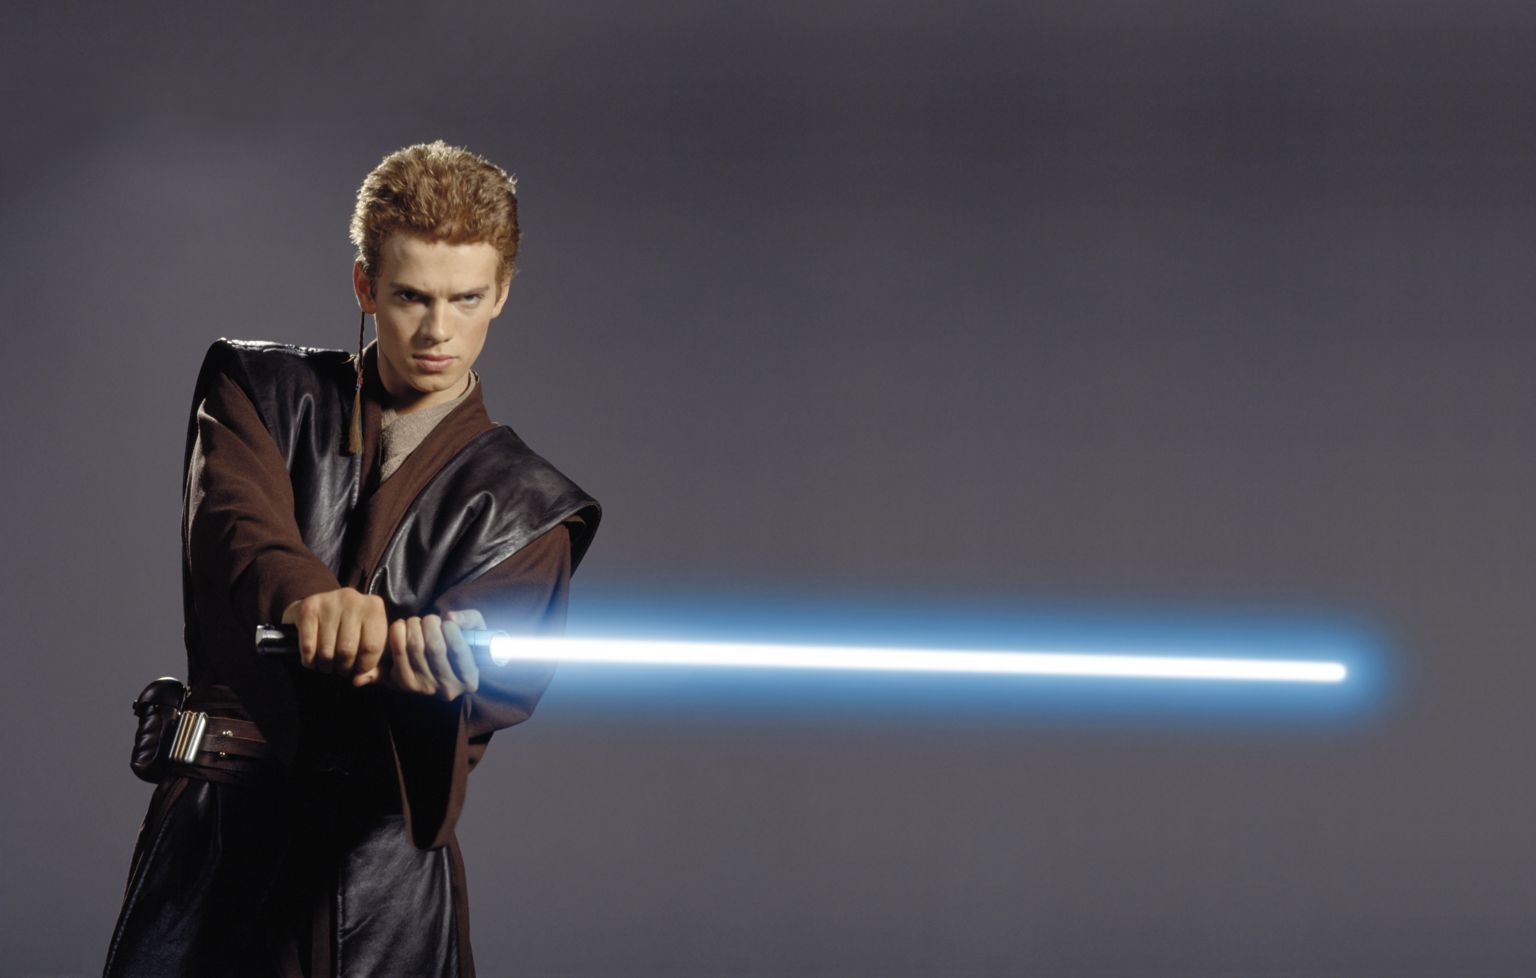 Hayden Christensen as the teenage Anakin Skywalker in Star Wars Episode II Attack of the Clones (2002)